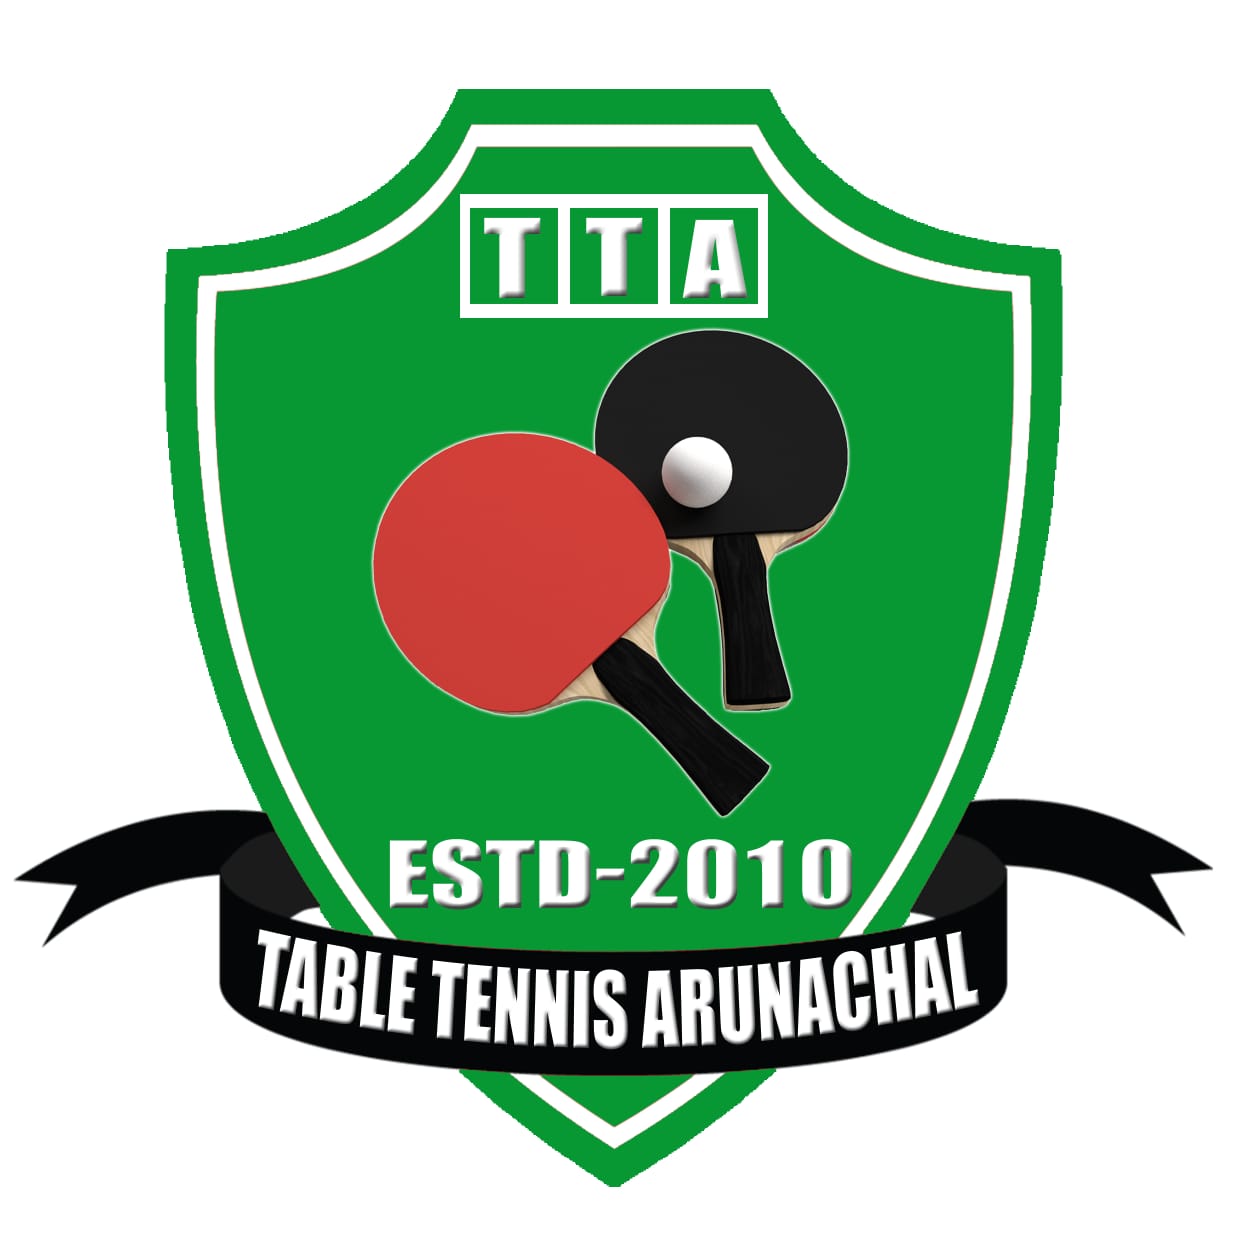 Table Tennis Arunachal Pradesh